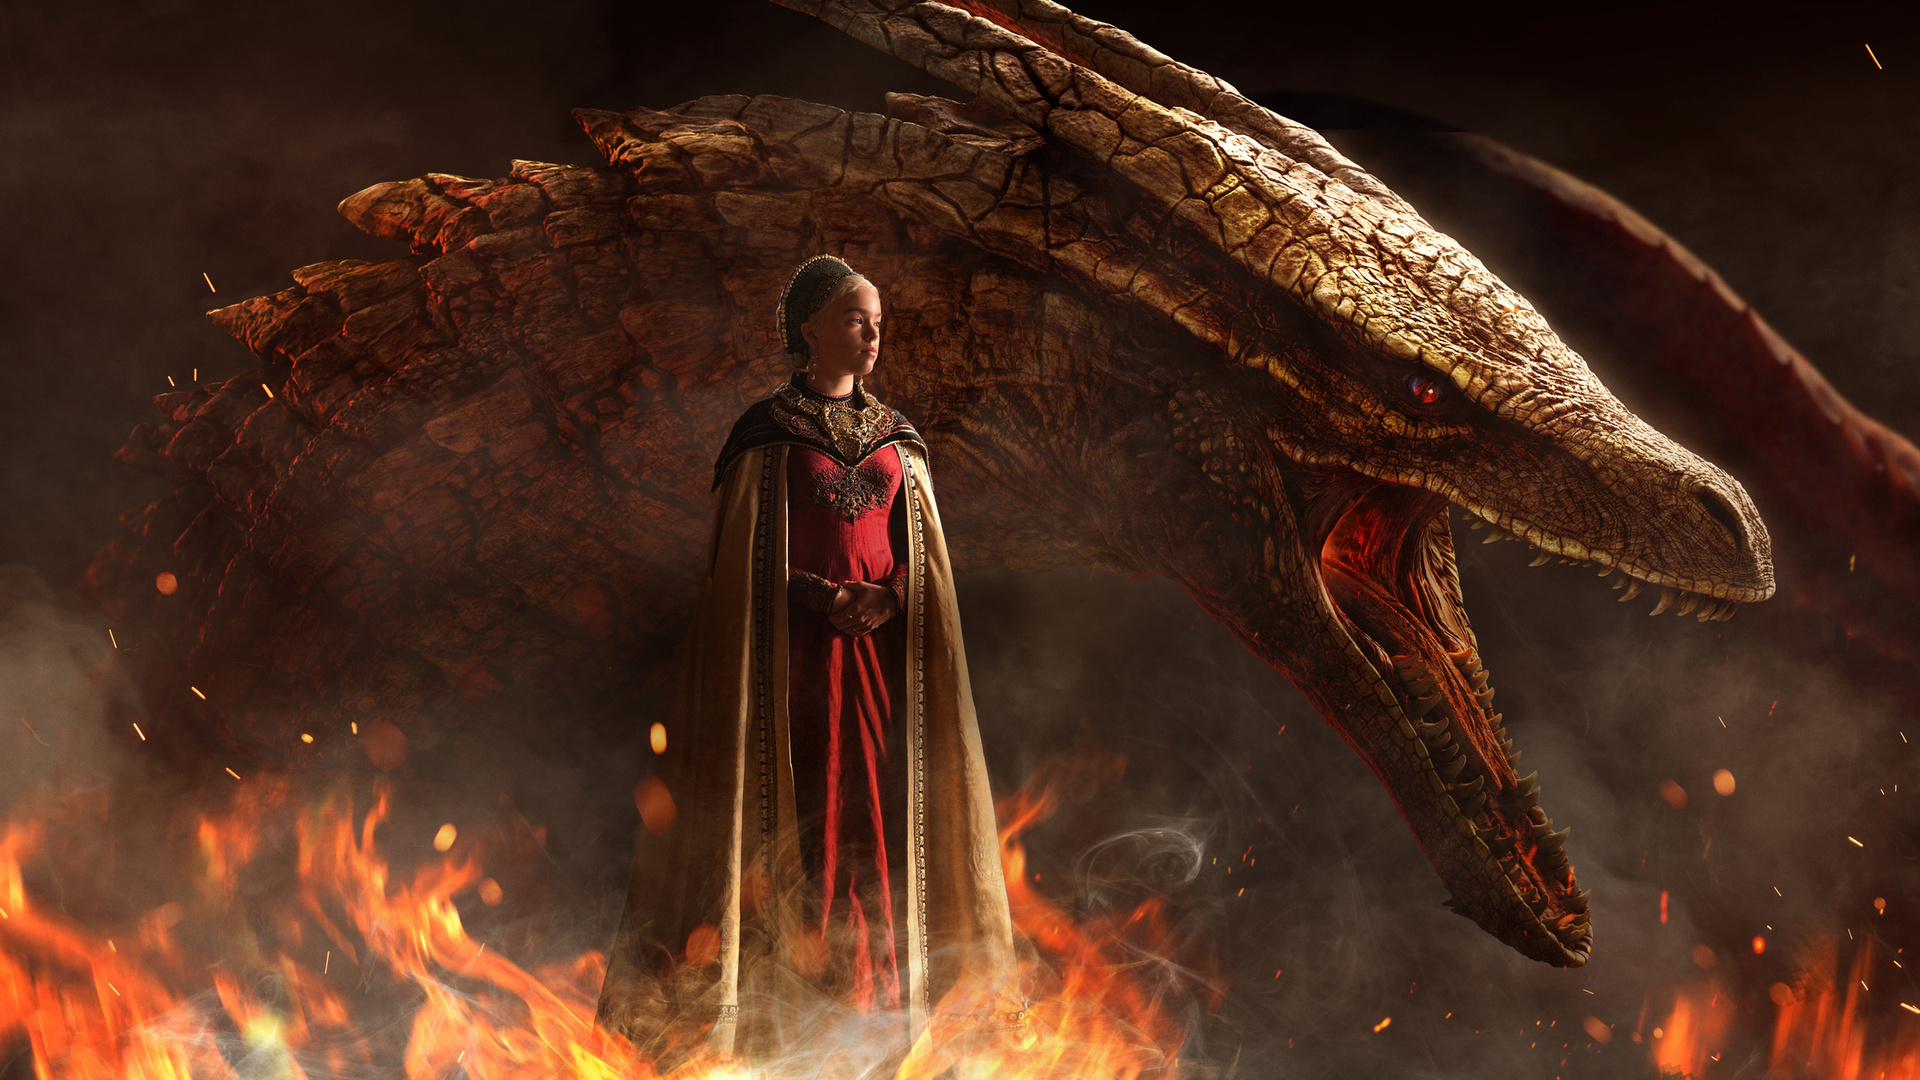 House of the Dragon  Segunda temporada promete reviravolta